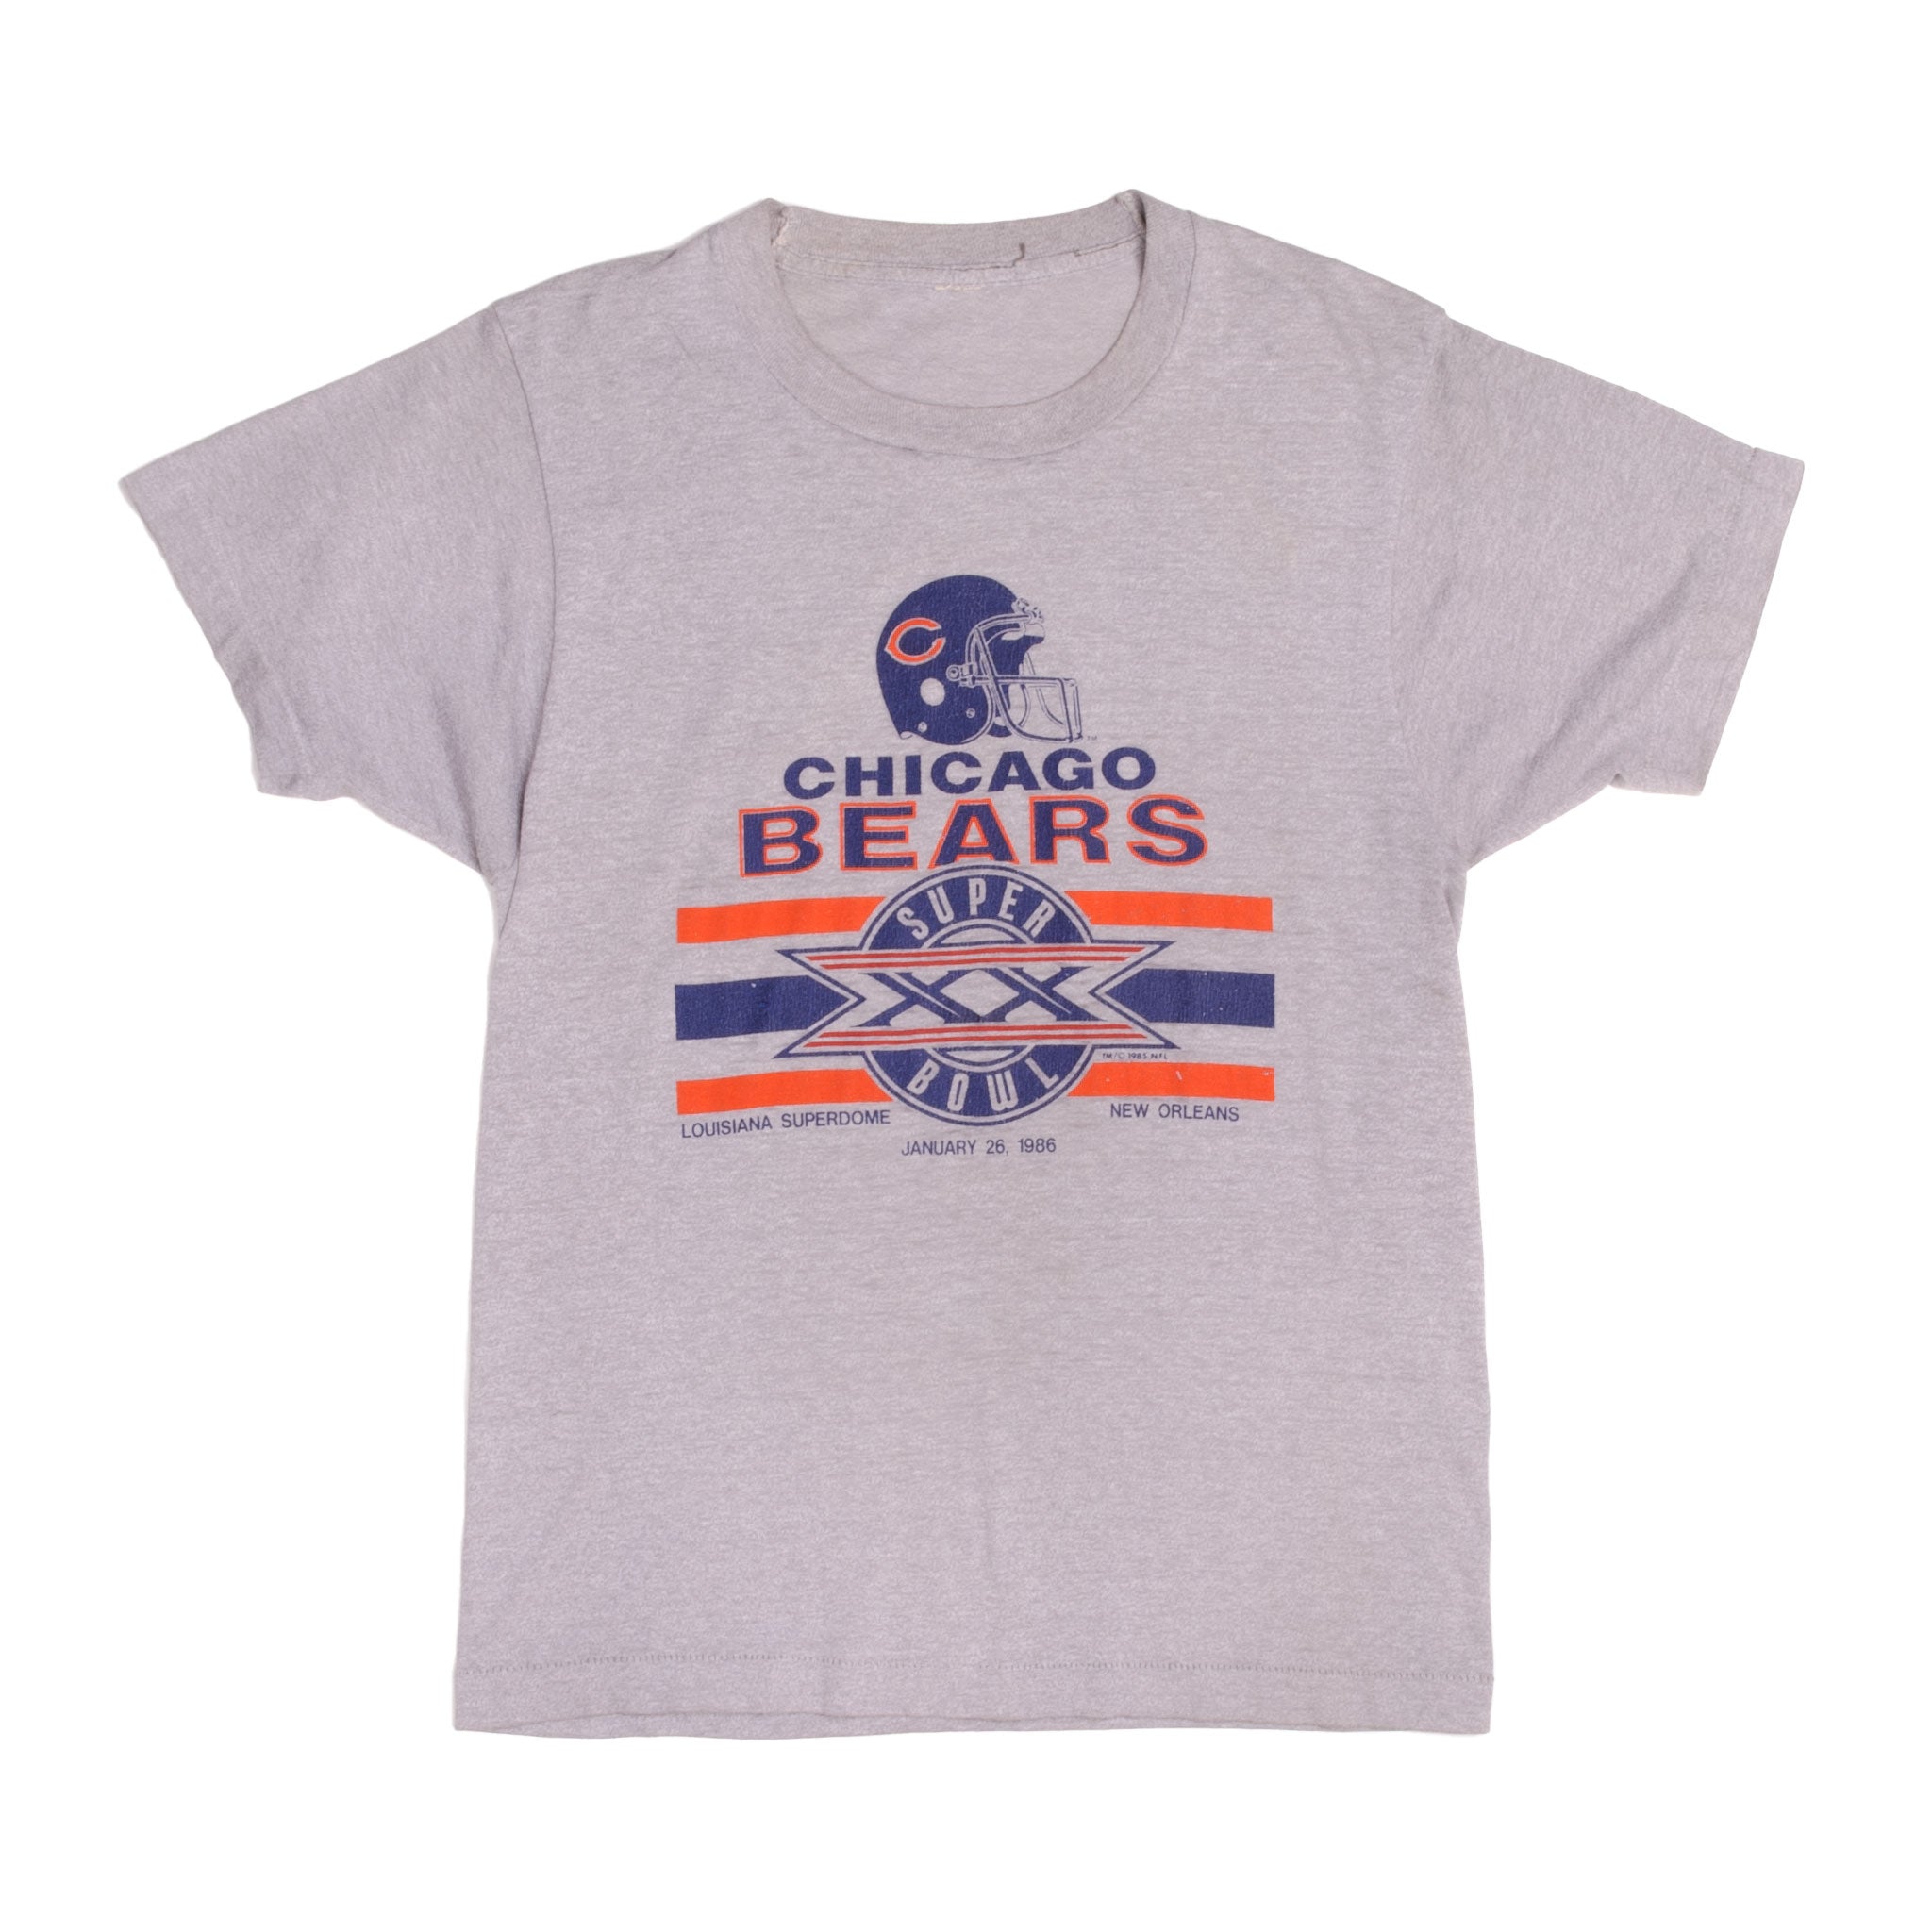 Little Earth 300632-BEAR-M Bowling Shirt Spare Chicago Bears - Medium